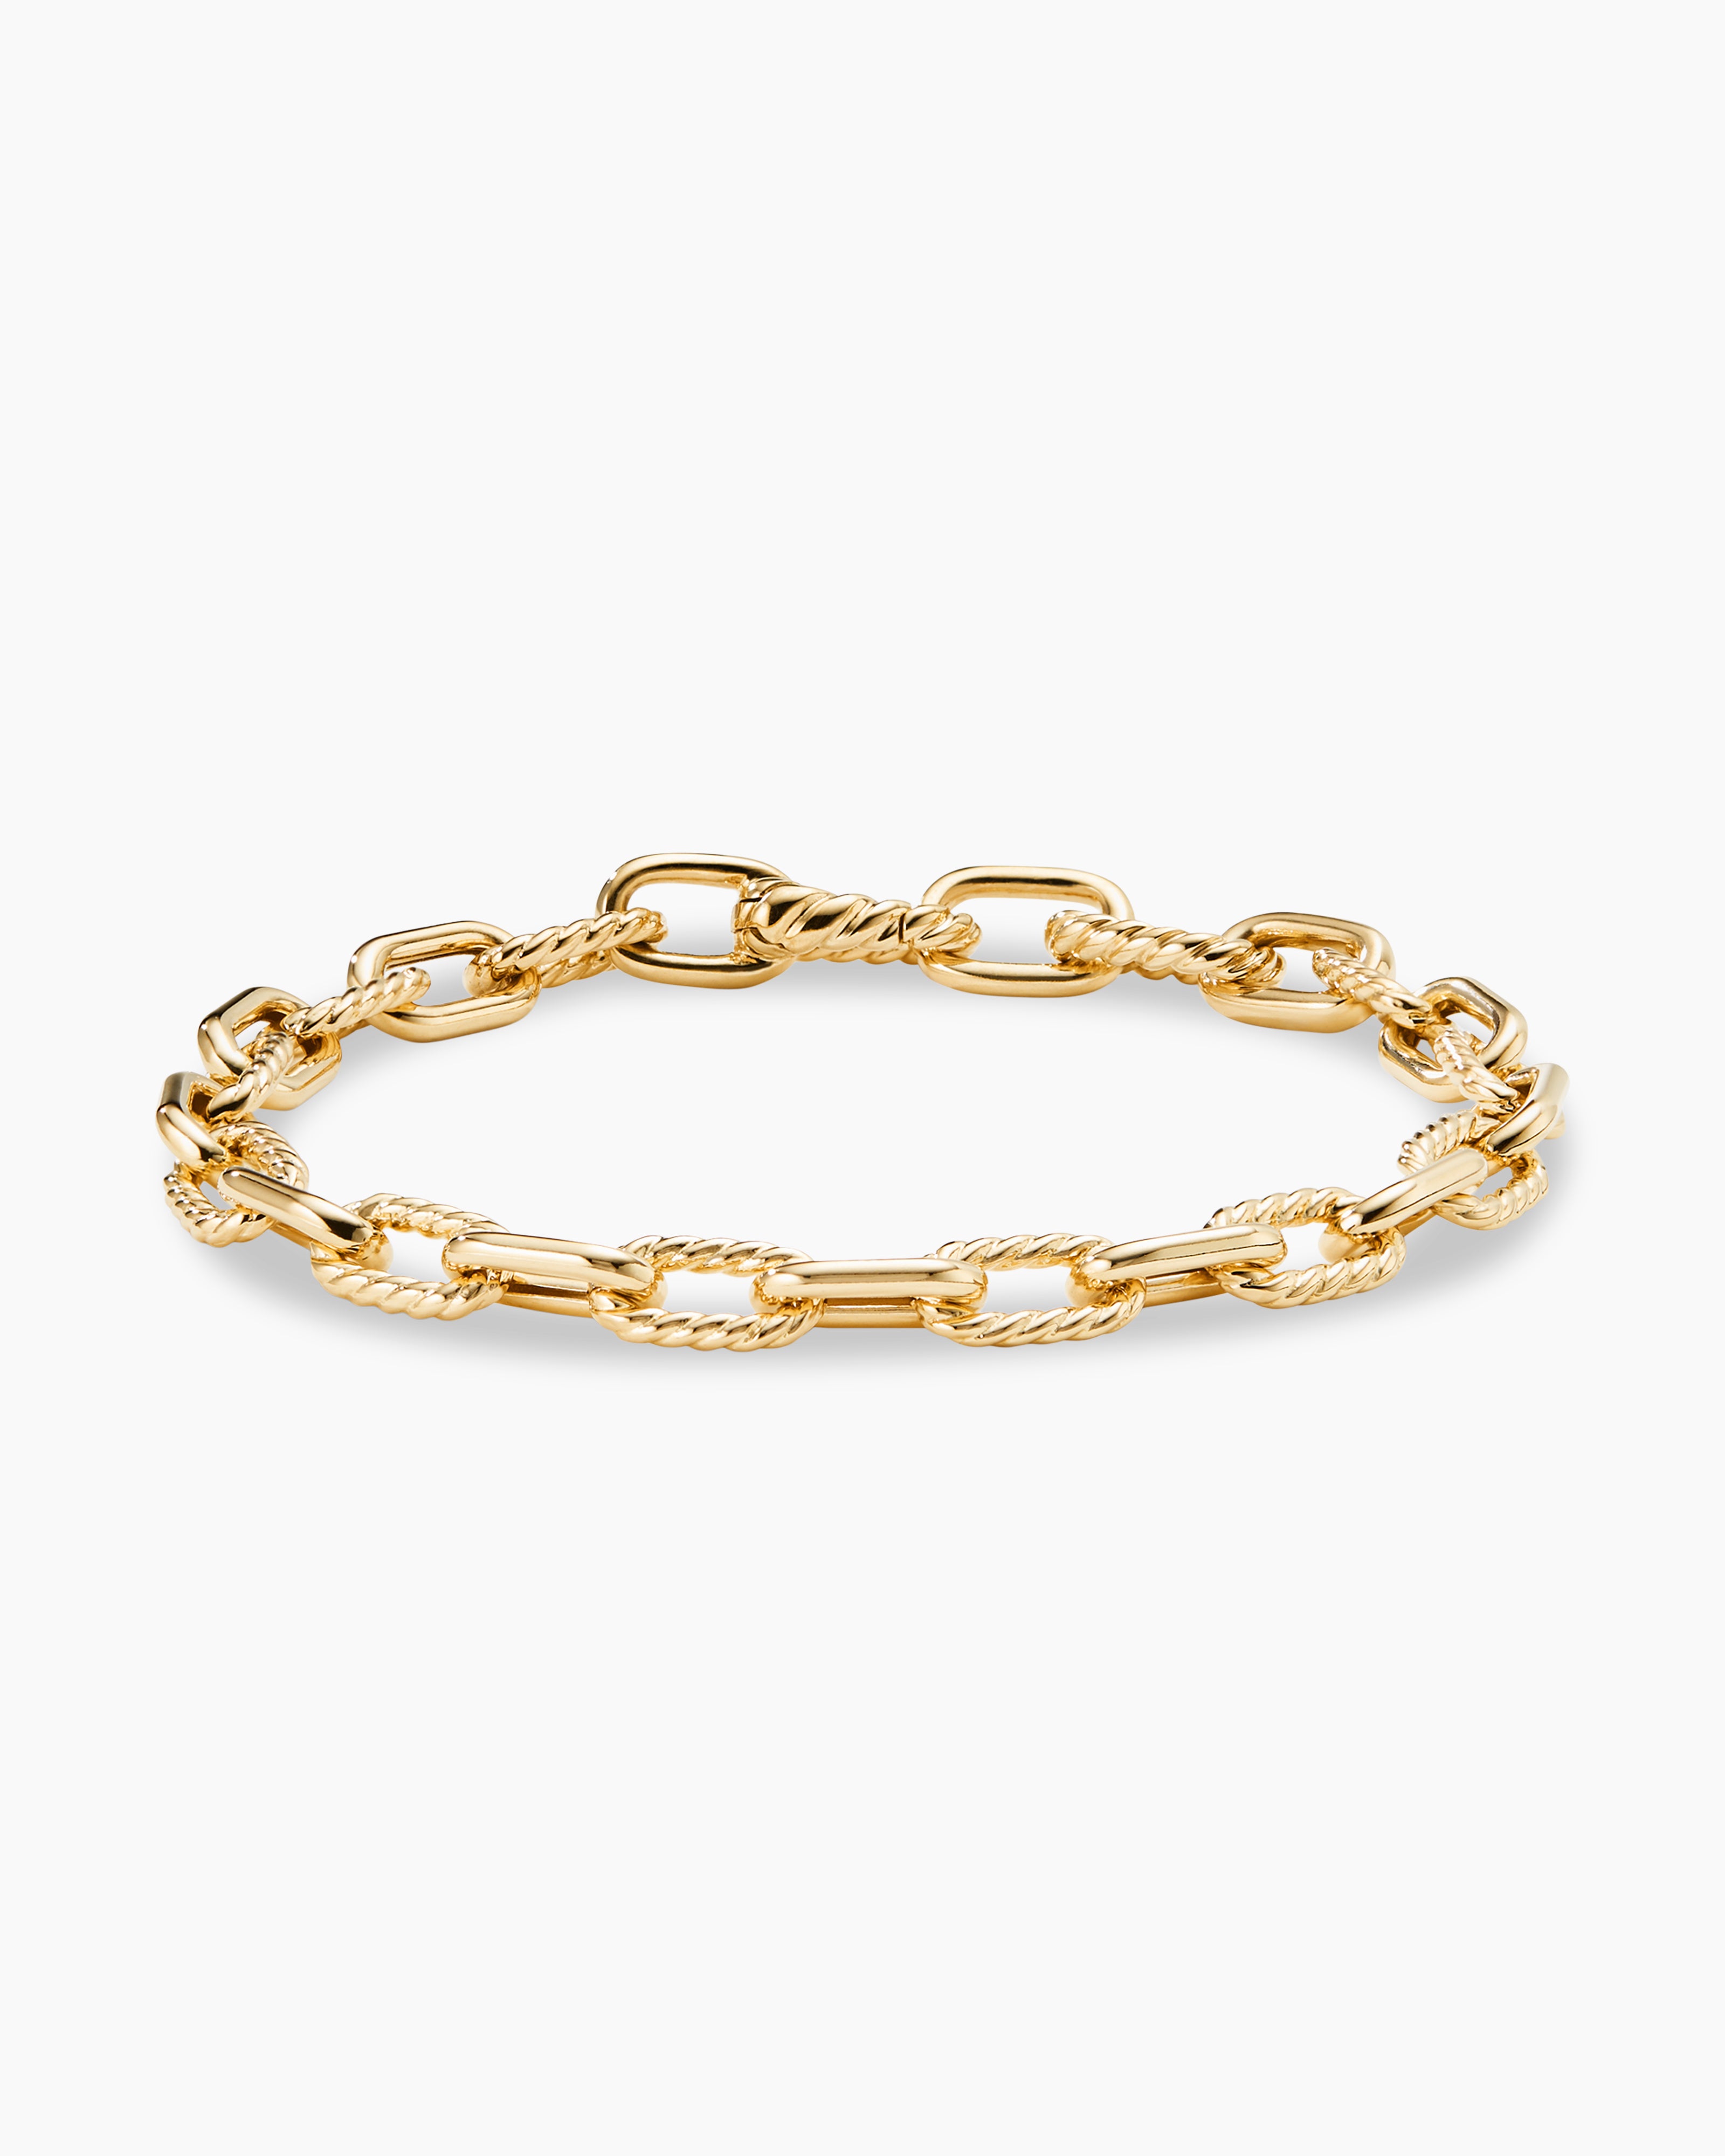 Ari Heart Delicate Chain Bracelet in 18k Yellow Gold Vermeil | Kendra Scott